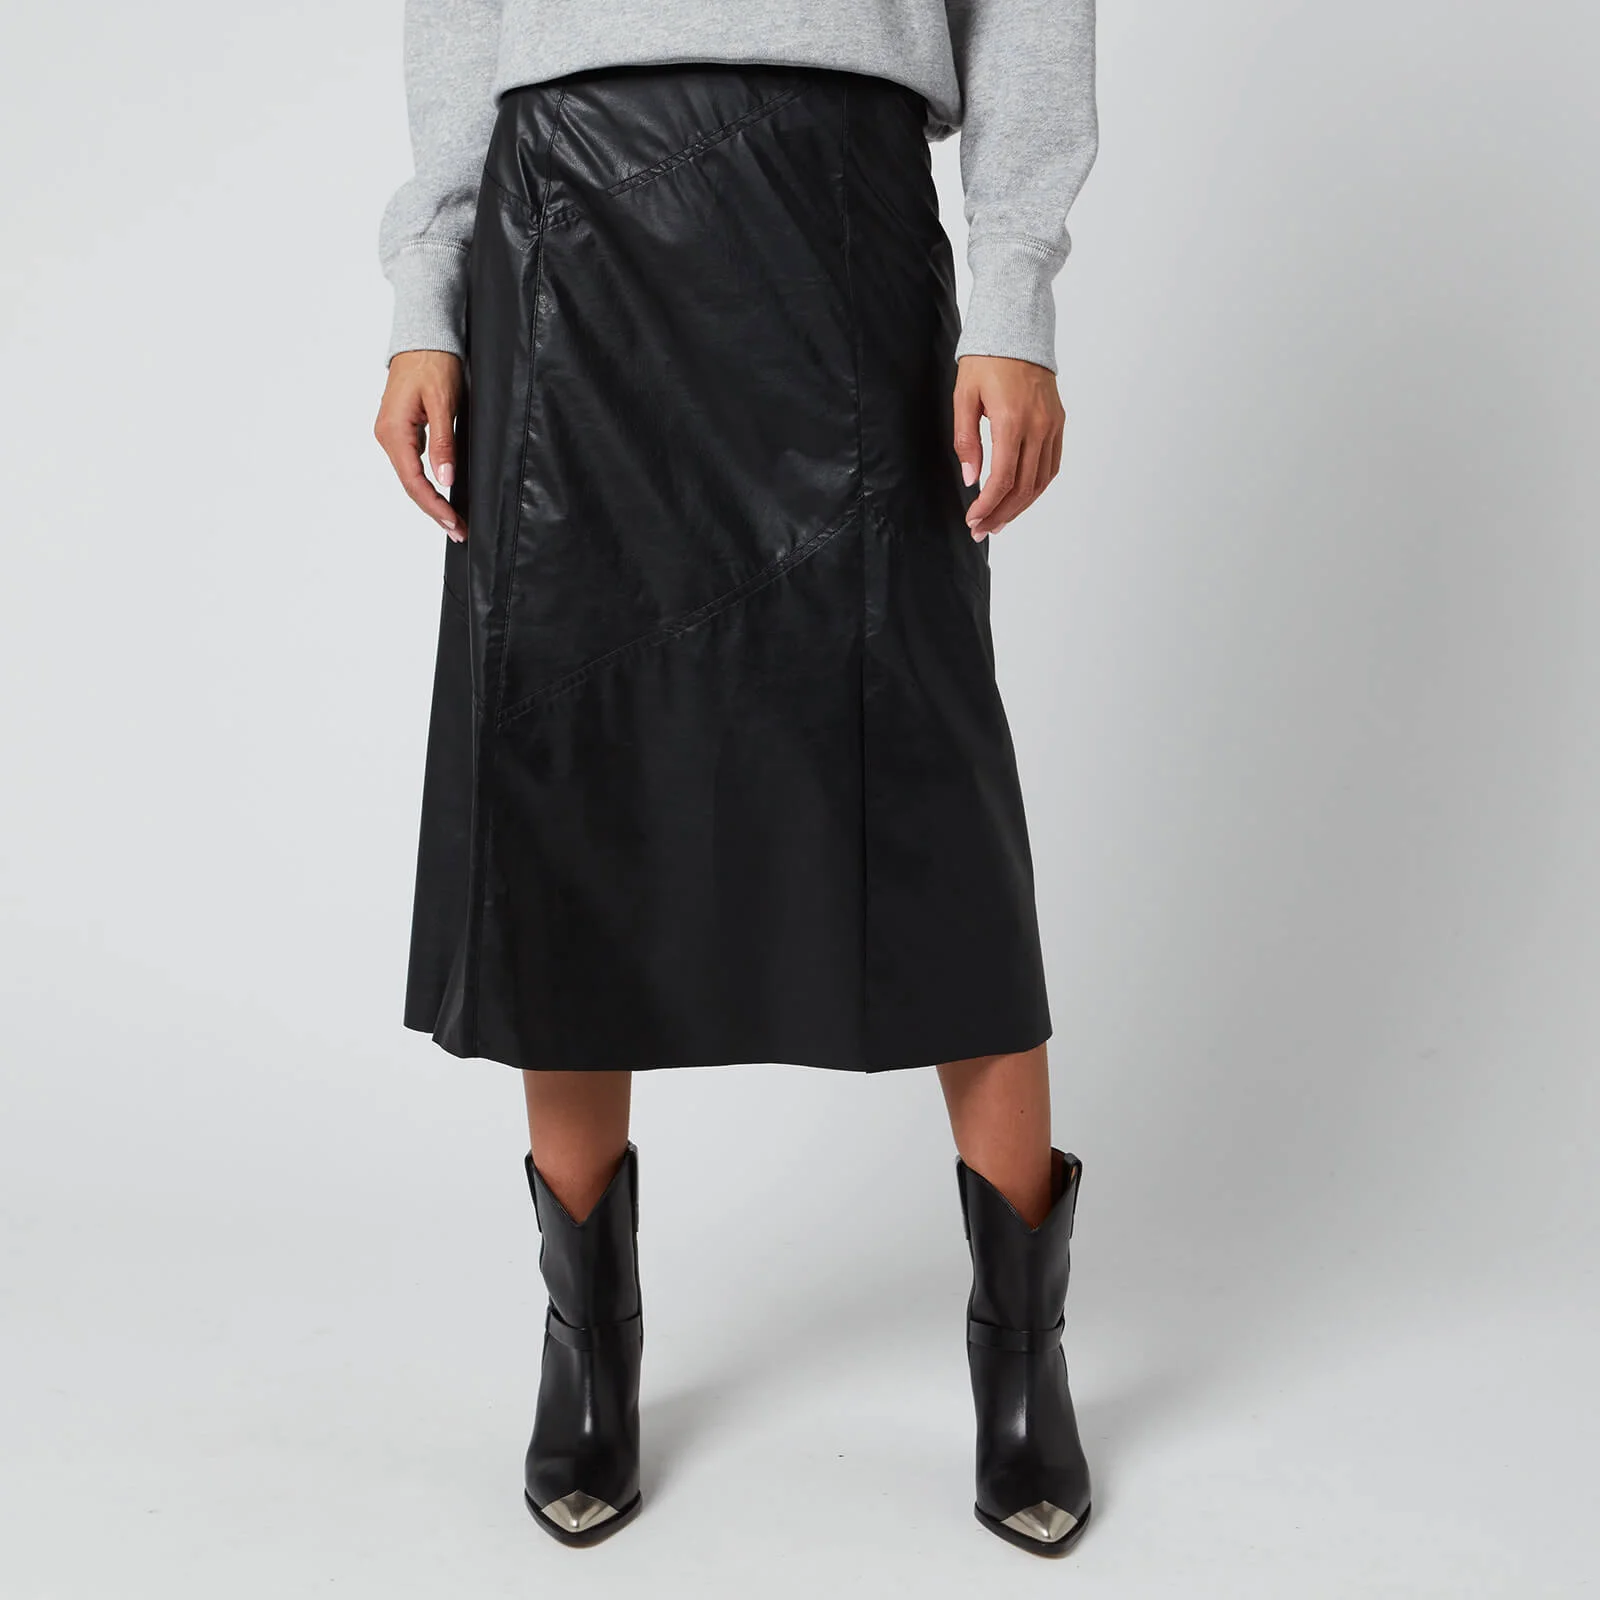 Marant Etoile Women's Domi Faux Leather Mid Skirt - Black Image 1